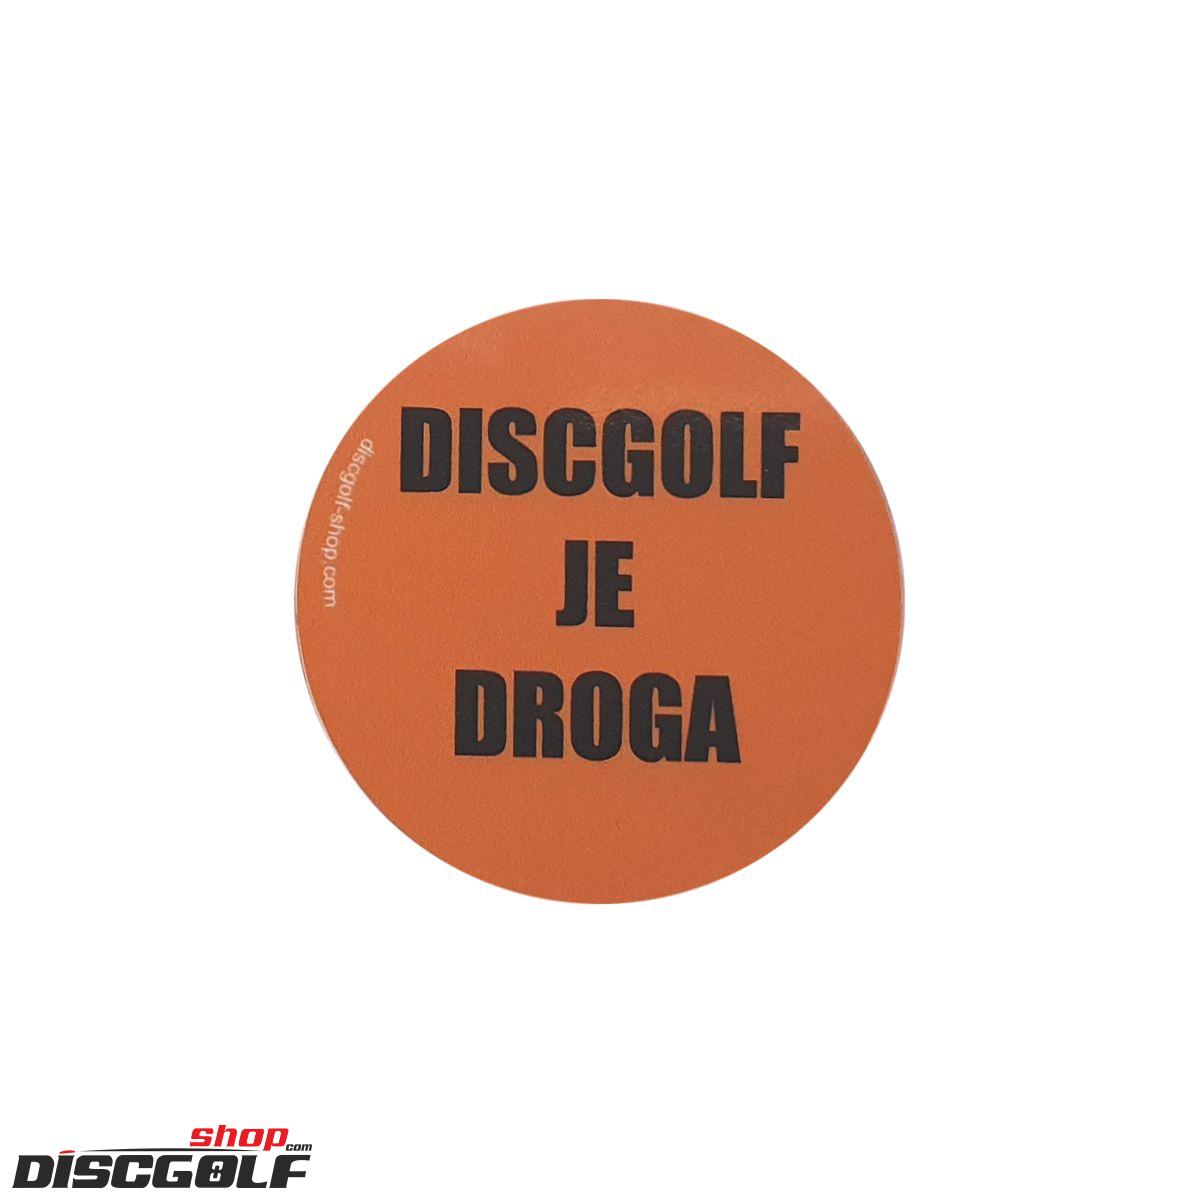 Samolepka "Discgolf je droga" (discgolf)